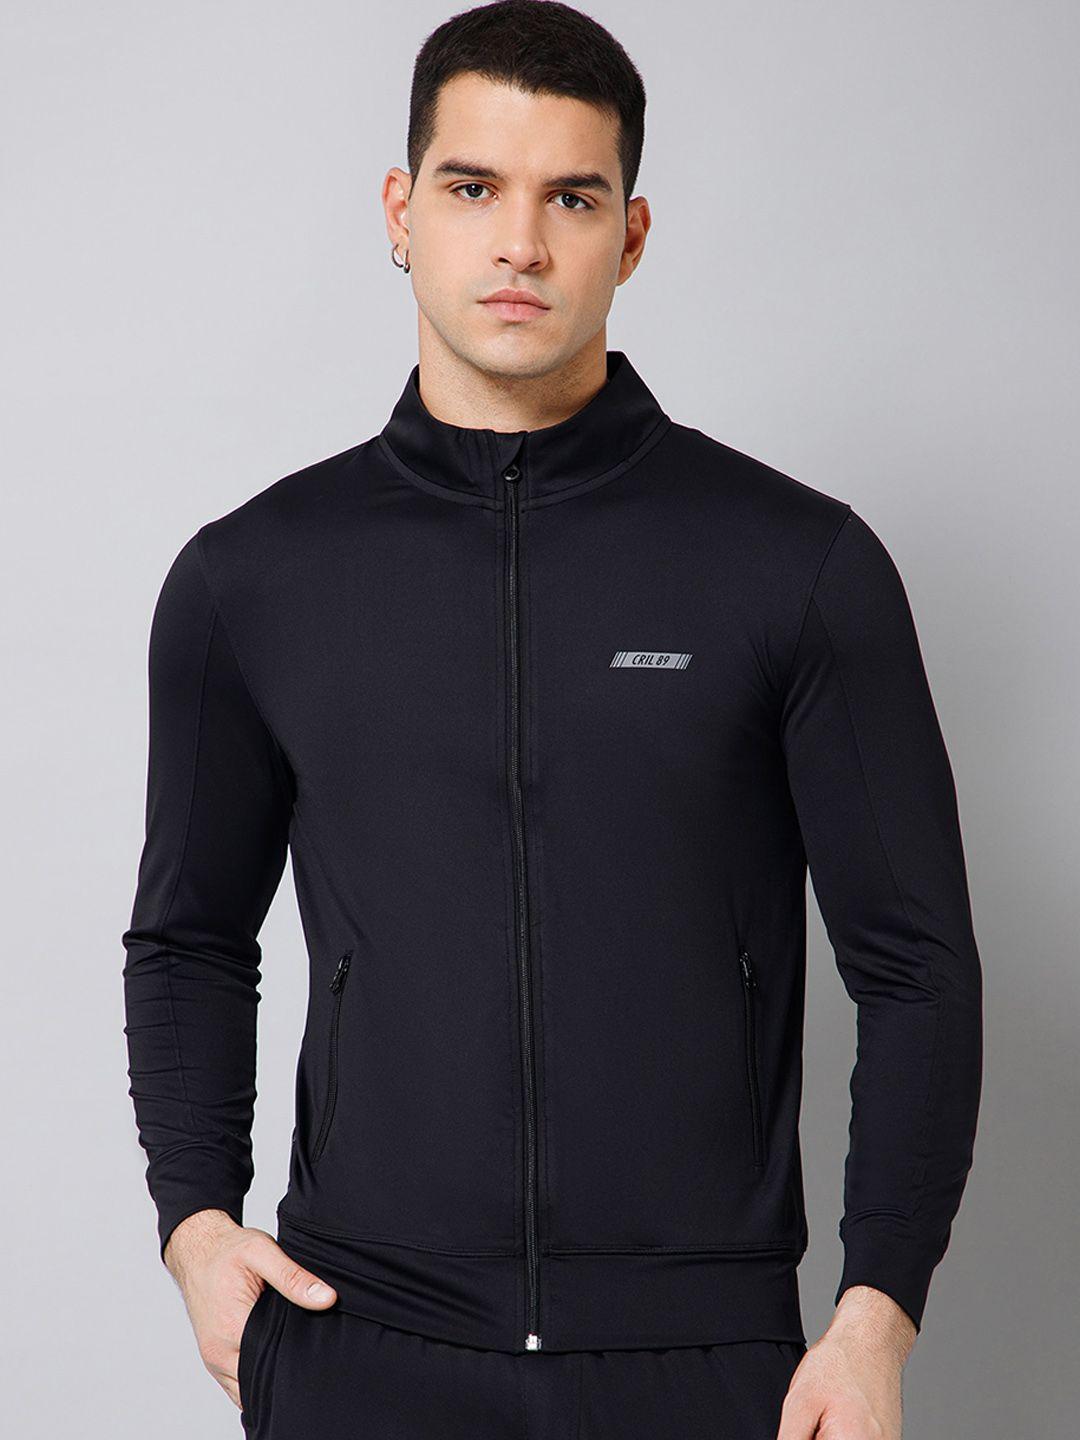 cantabil-mock-collar-long-sleeve-lightweight-running-sporty-jacket